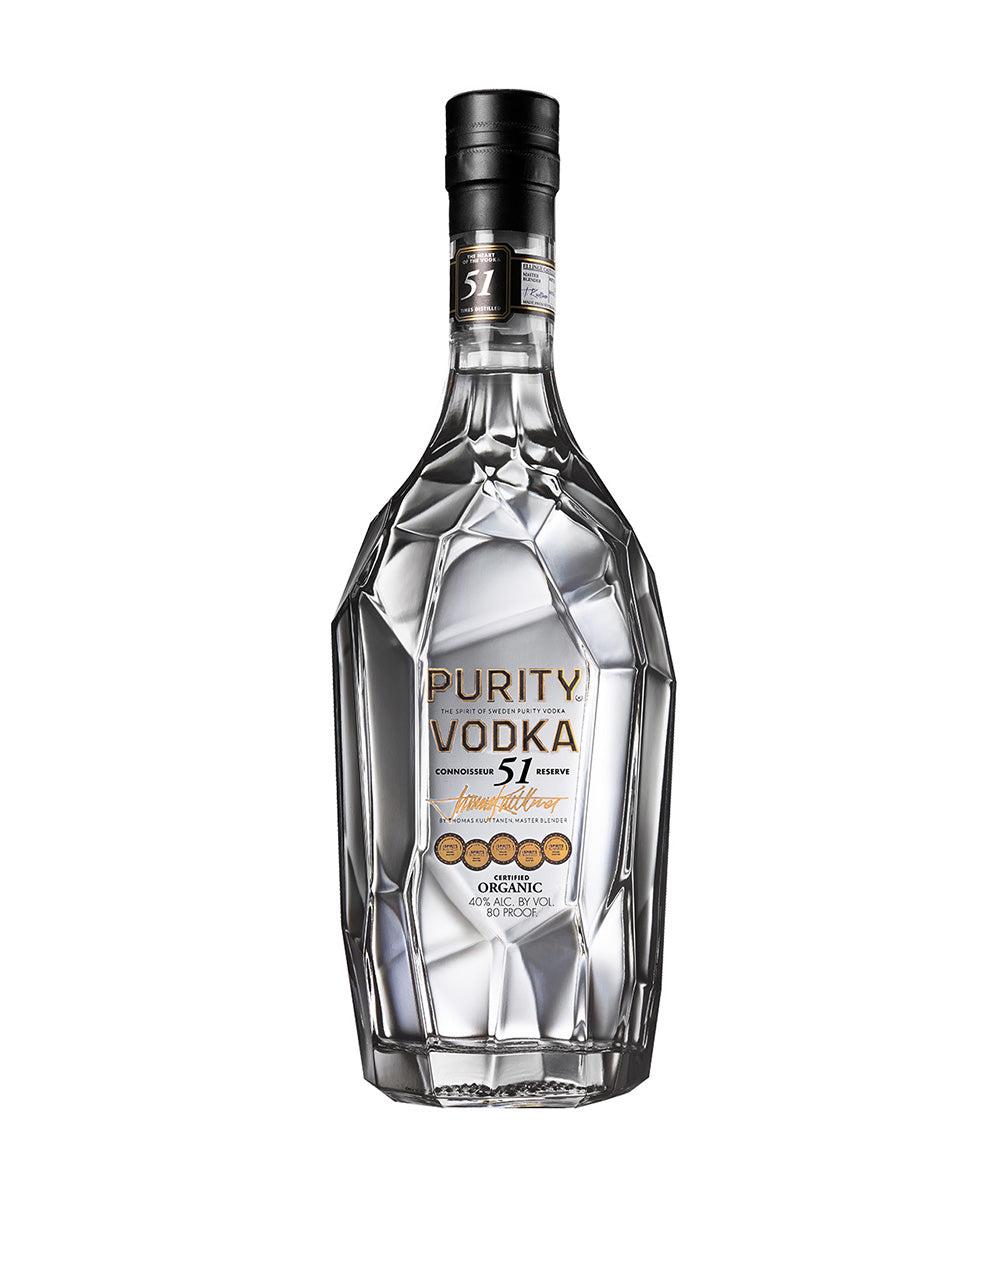 Purity Organic Vodka Connoisseur 51 Reserve